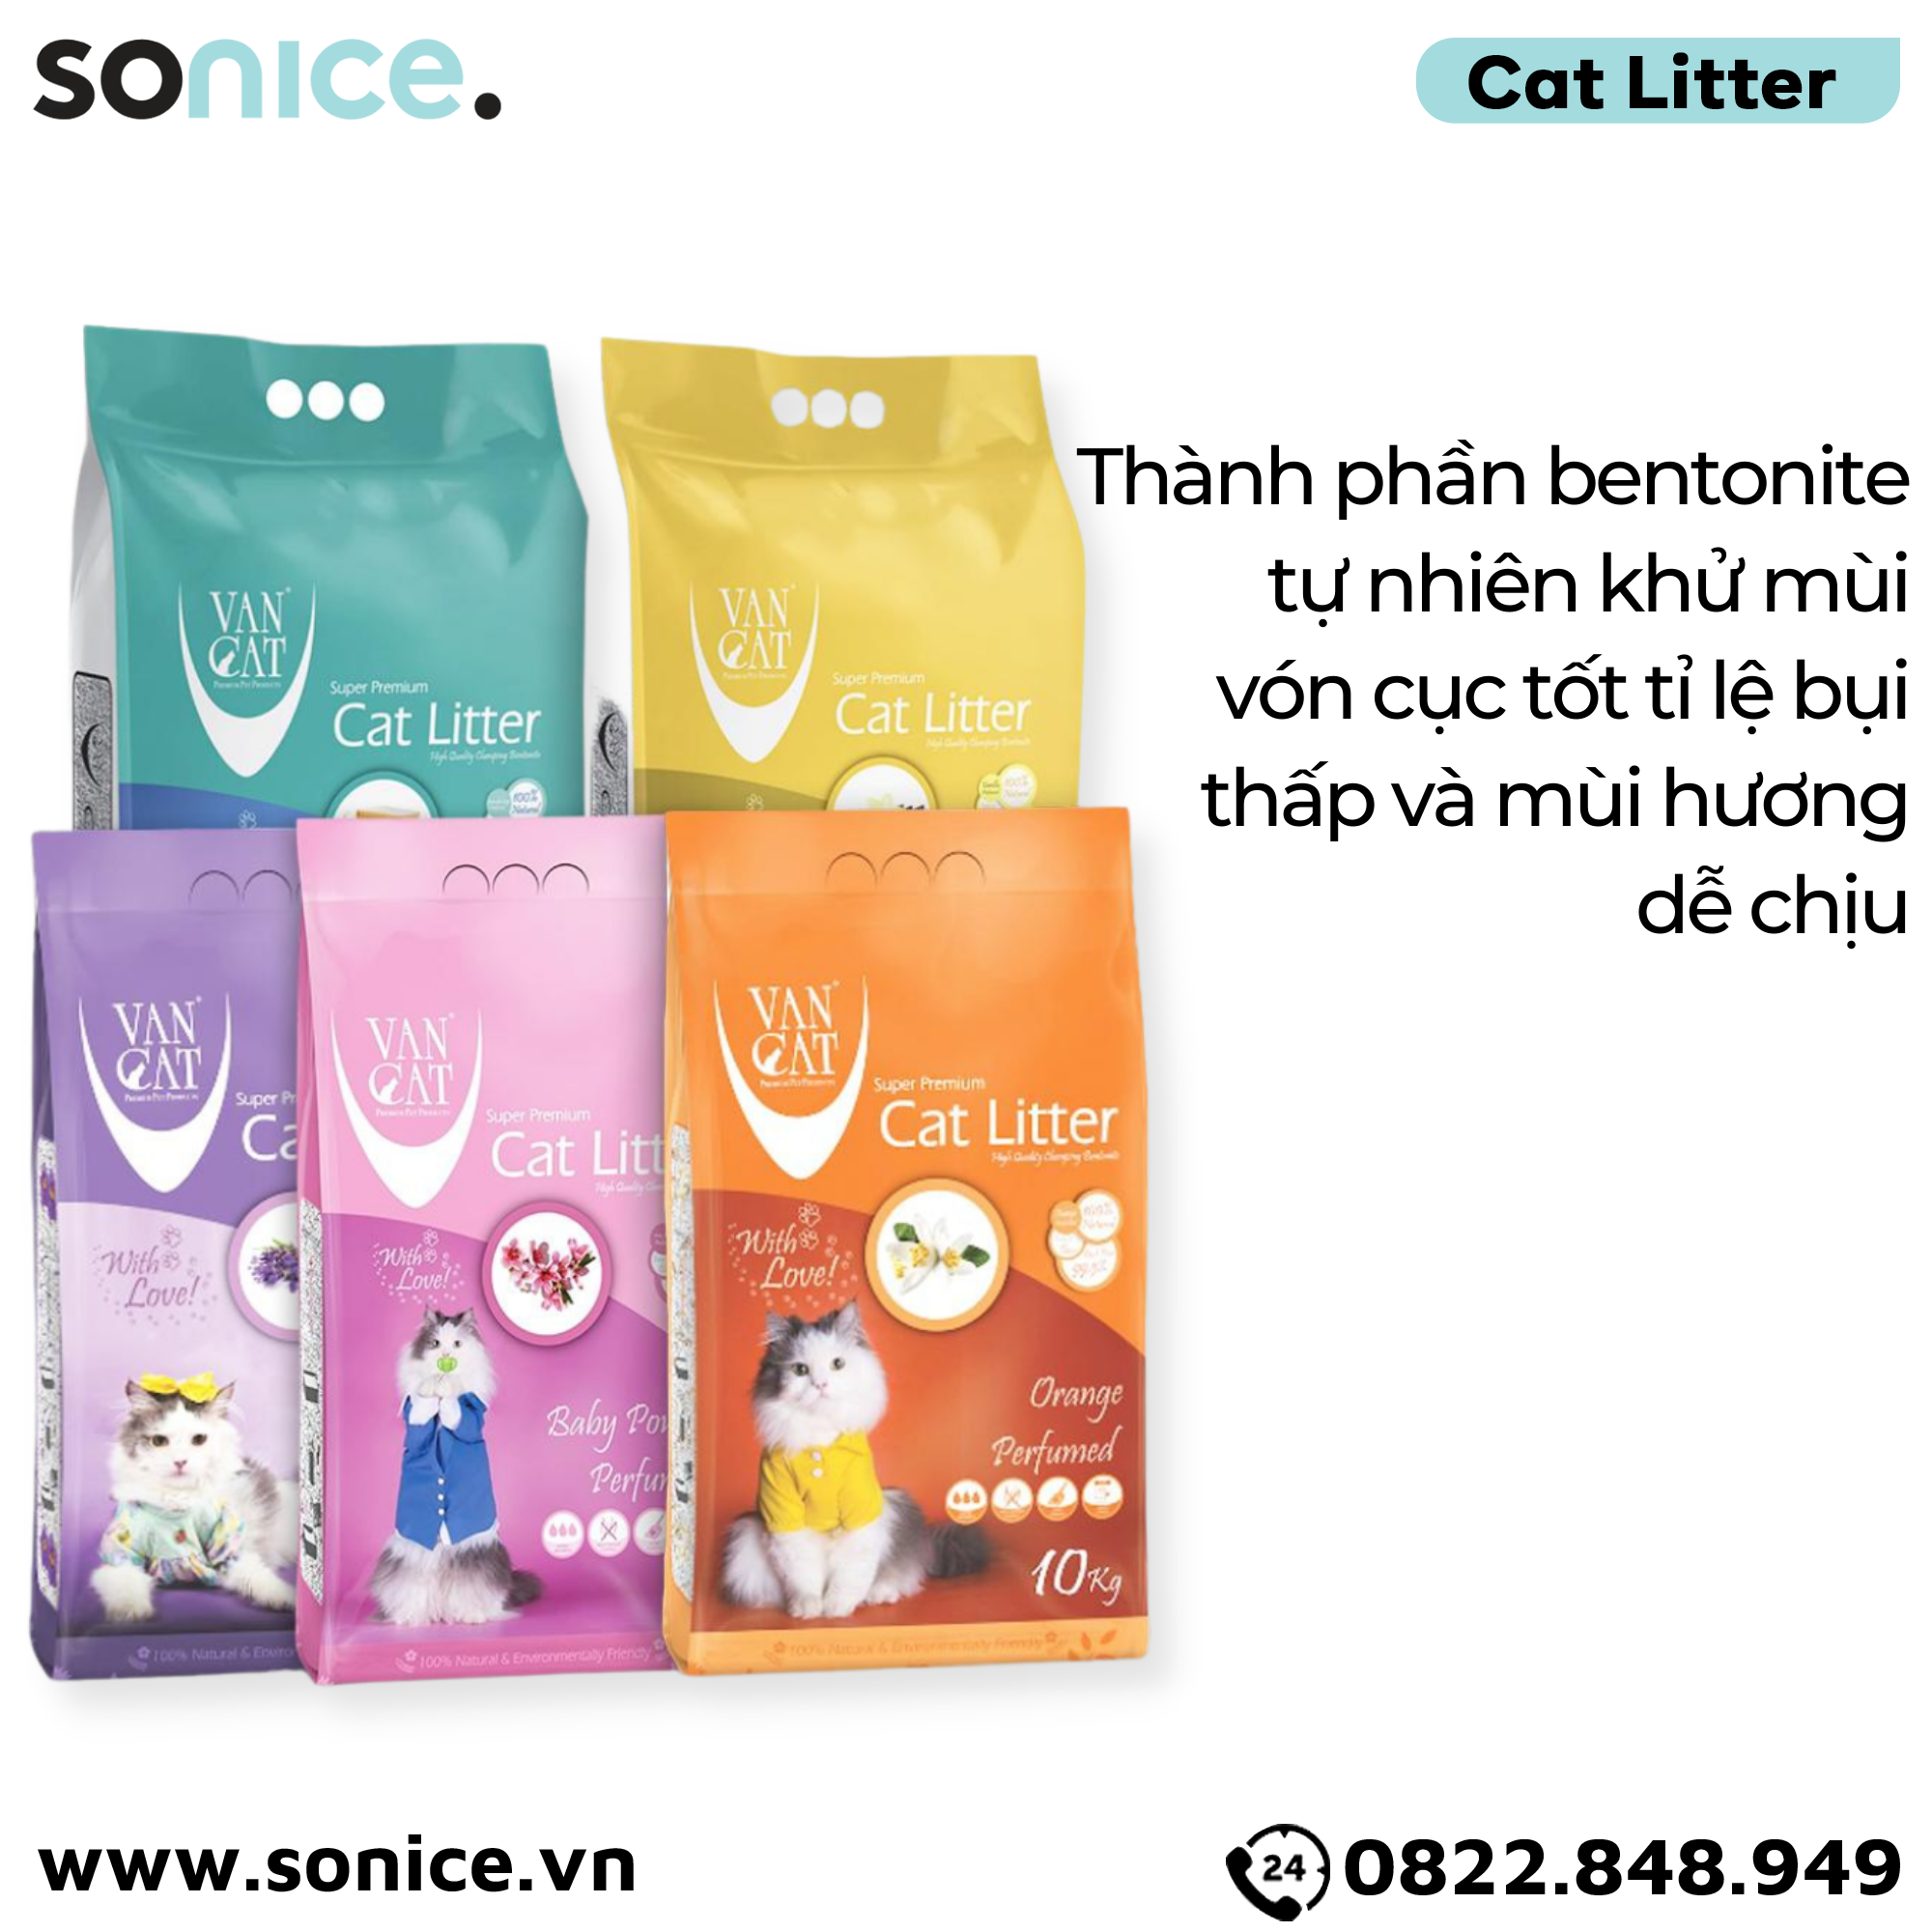  Cát vệ sinh mèo VANs Catsand Super Premium Litter 10kg SONICE. 